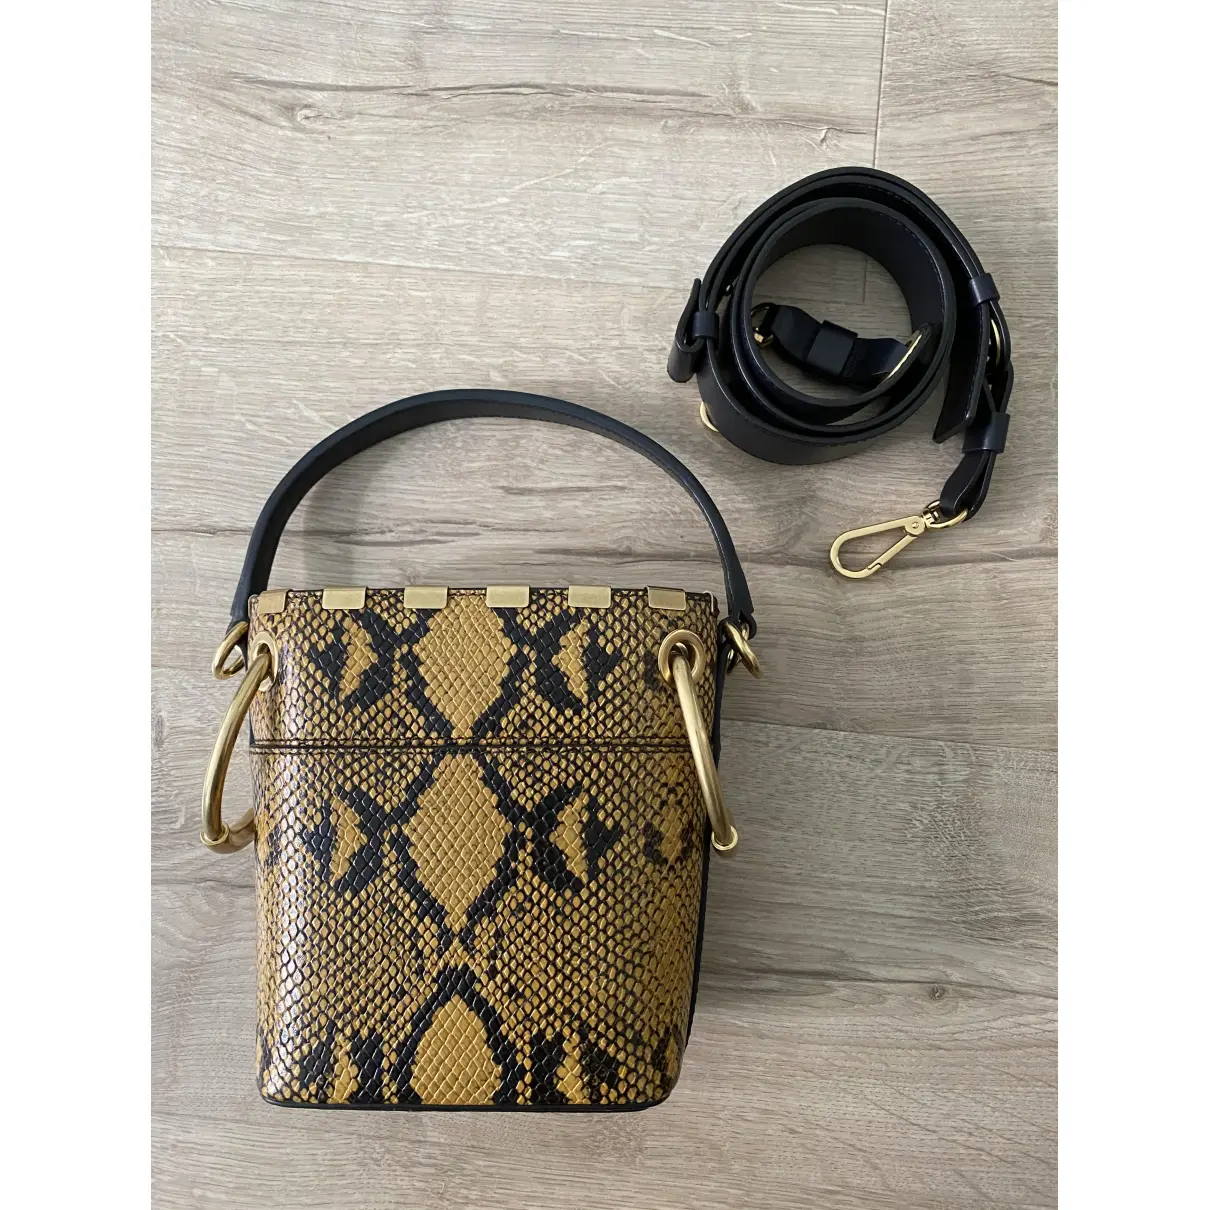 Buy Chloé Roy handbag online